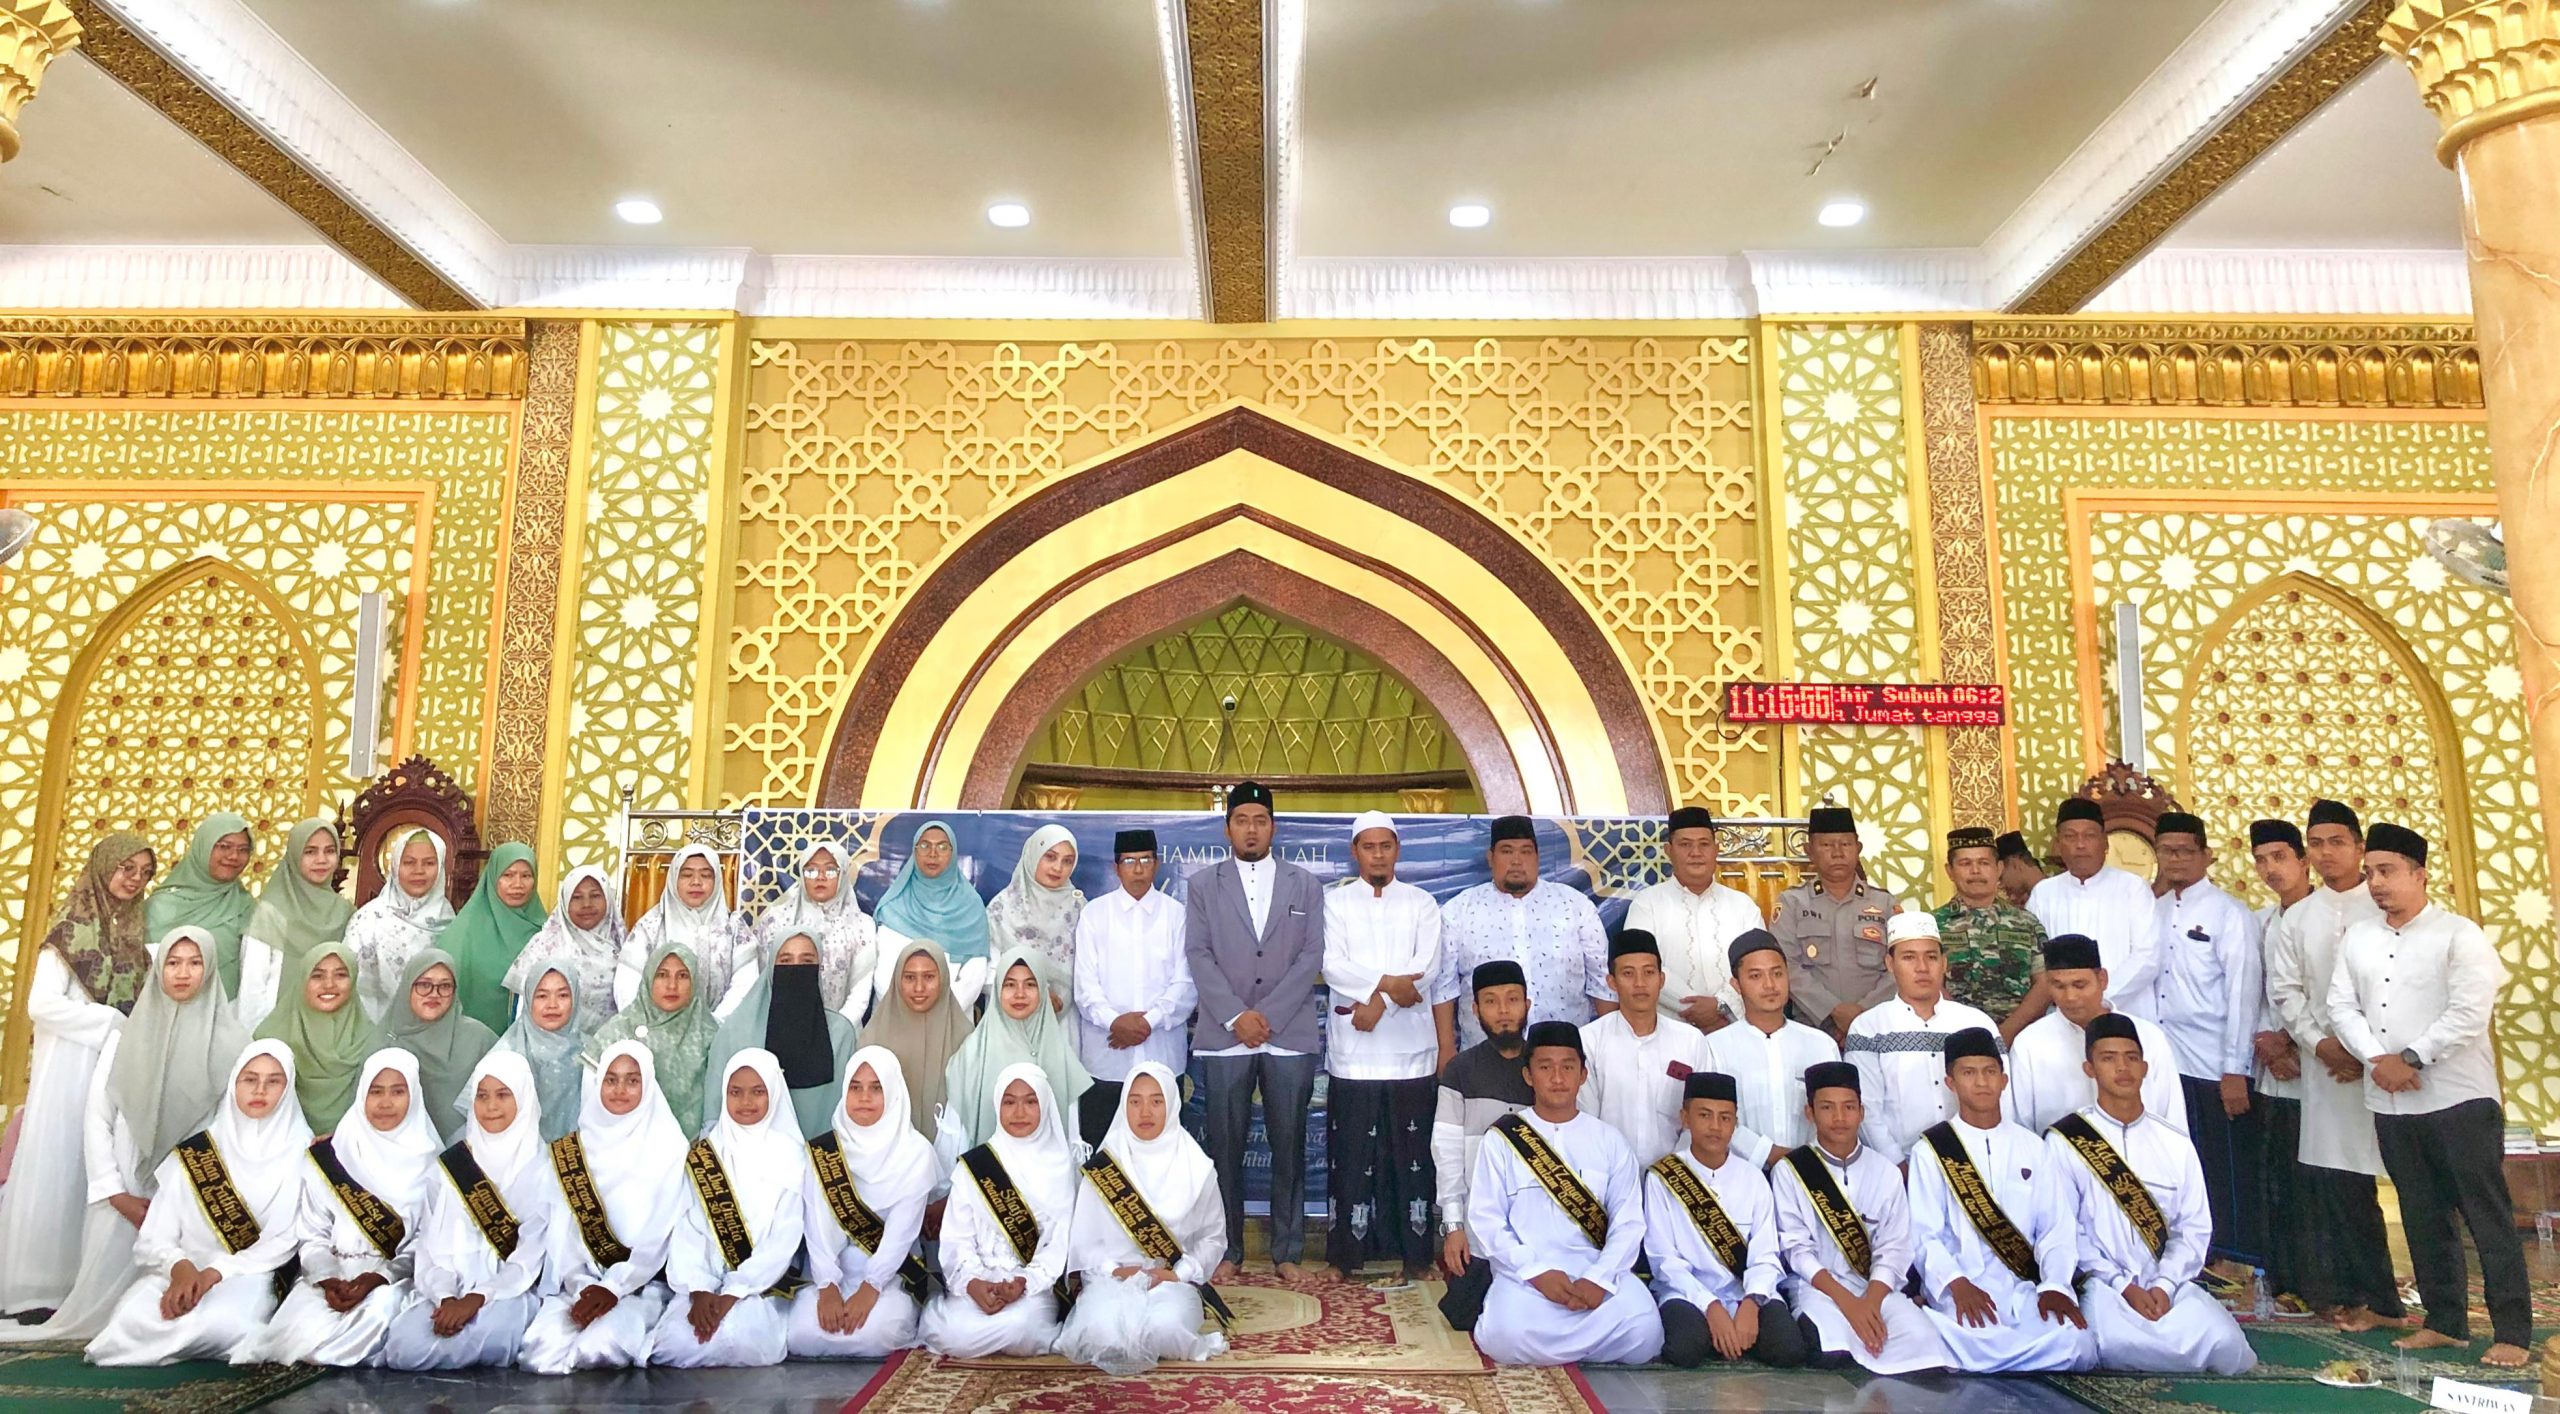 14 Santri MUQ Aceh Selatan Khatam Al-Quran 30 Juz